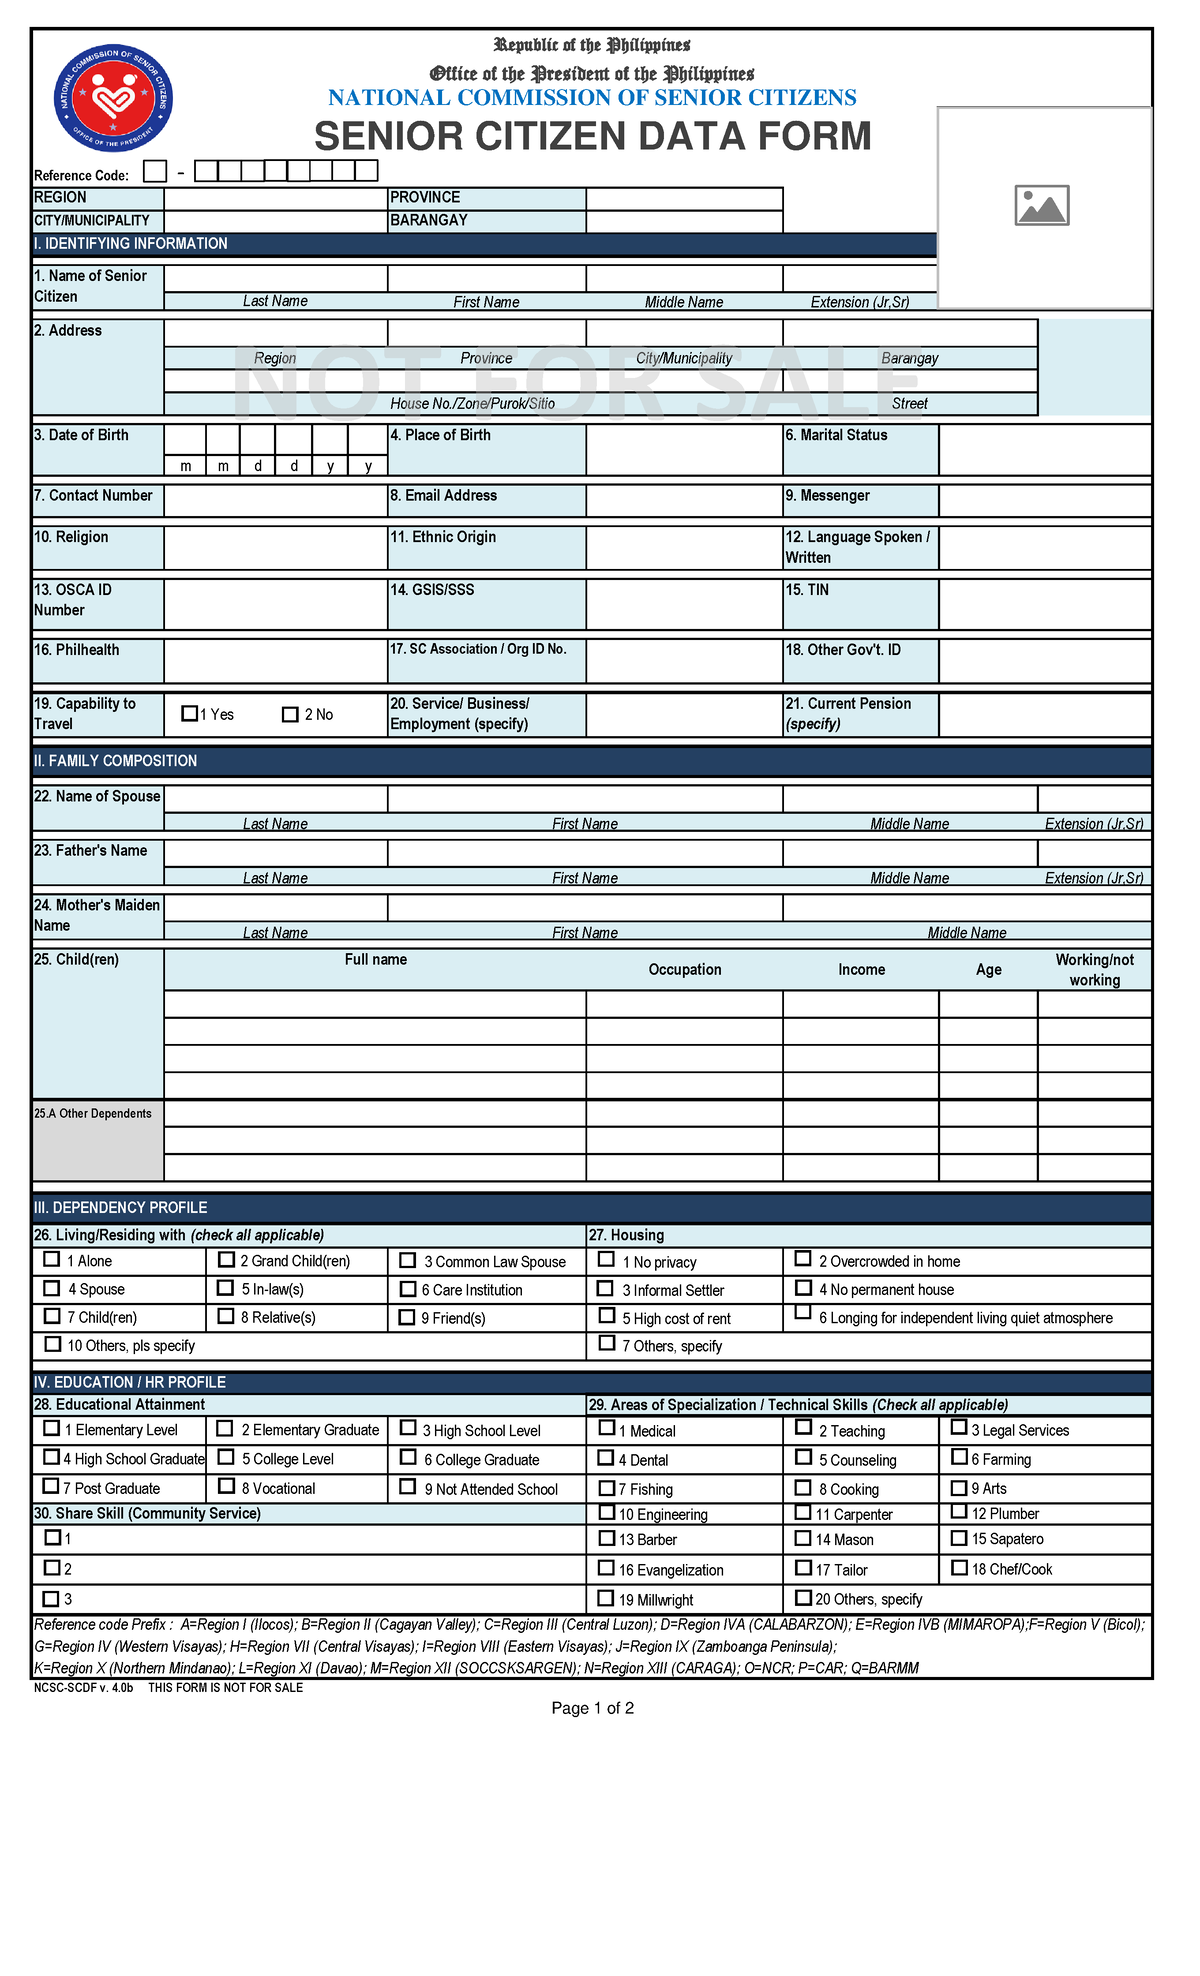 SCDF V4b2 Senior Citizen Data Form Reference Code REGION PROVINCE